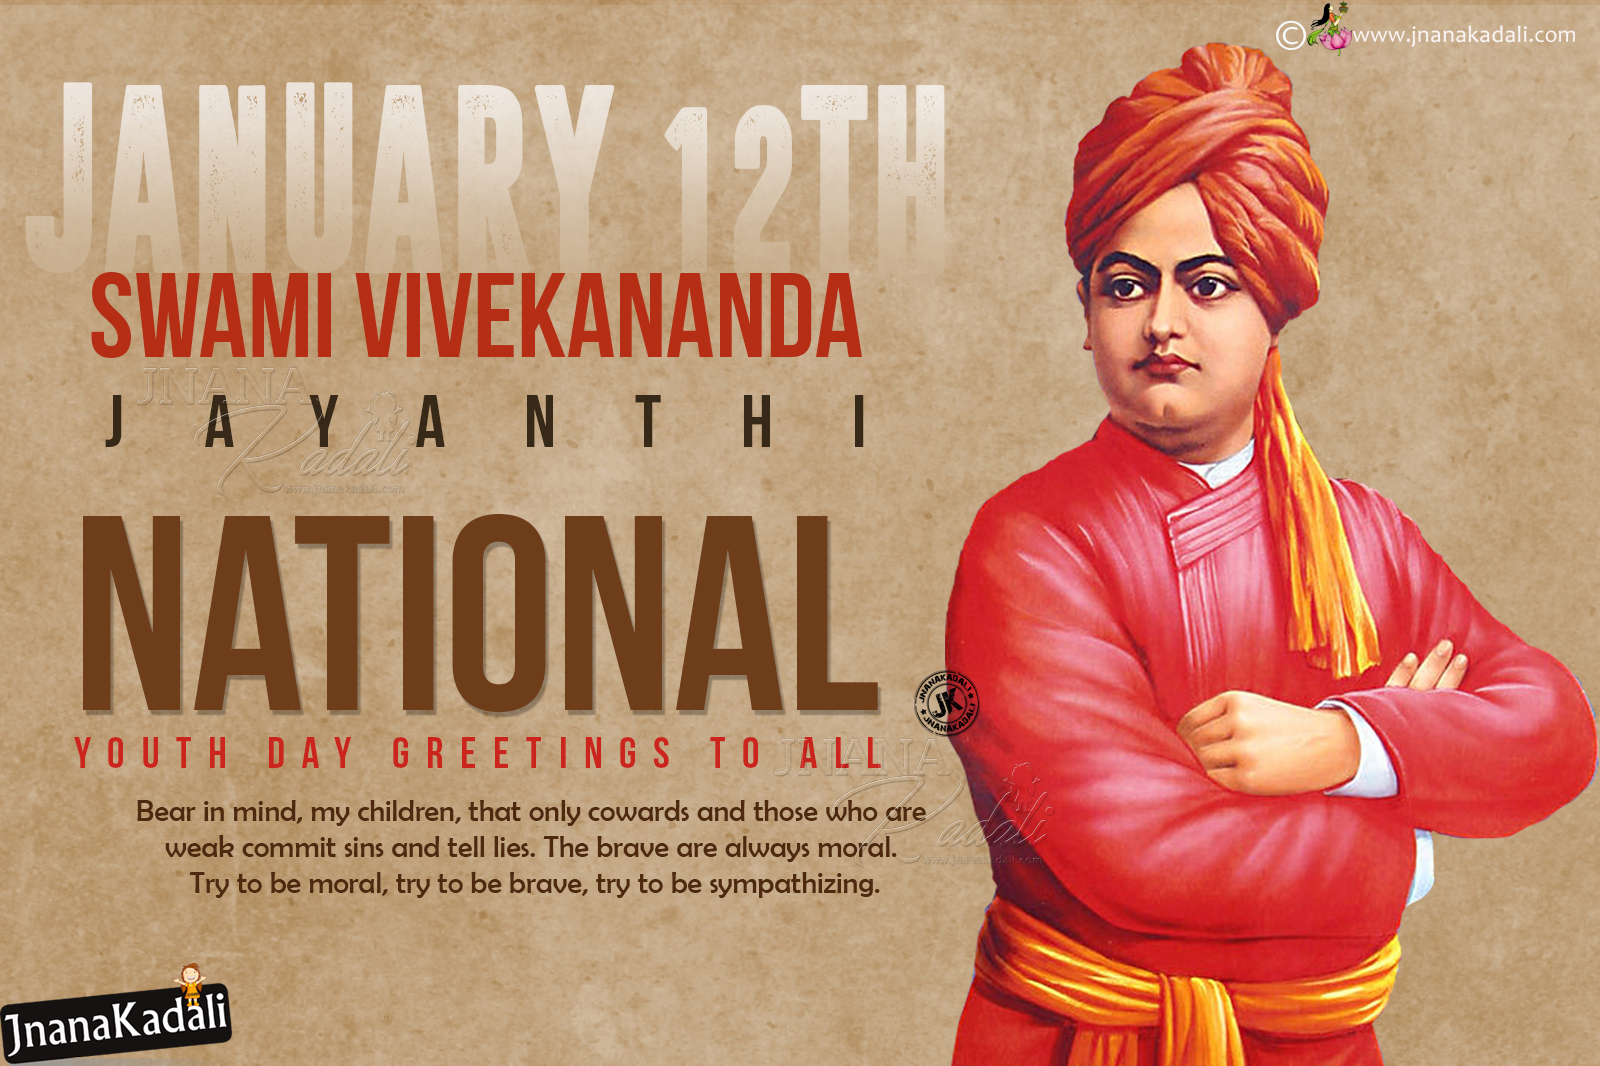 12th January Swami Vivekananda Jayanthi -National Youth Day Greetings in English. JNANA KADALI.COM. Telugu Quotes. English quotes. Hindi quotes. Tamil quotes. Dharmasandehalu